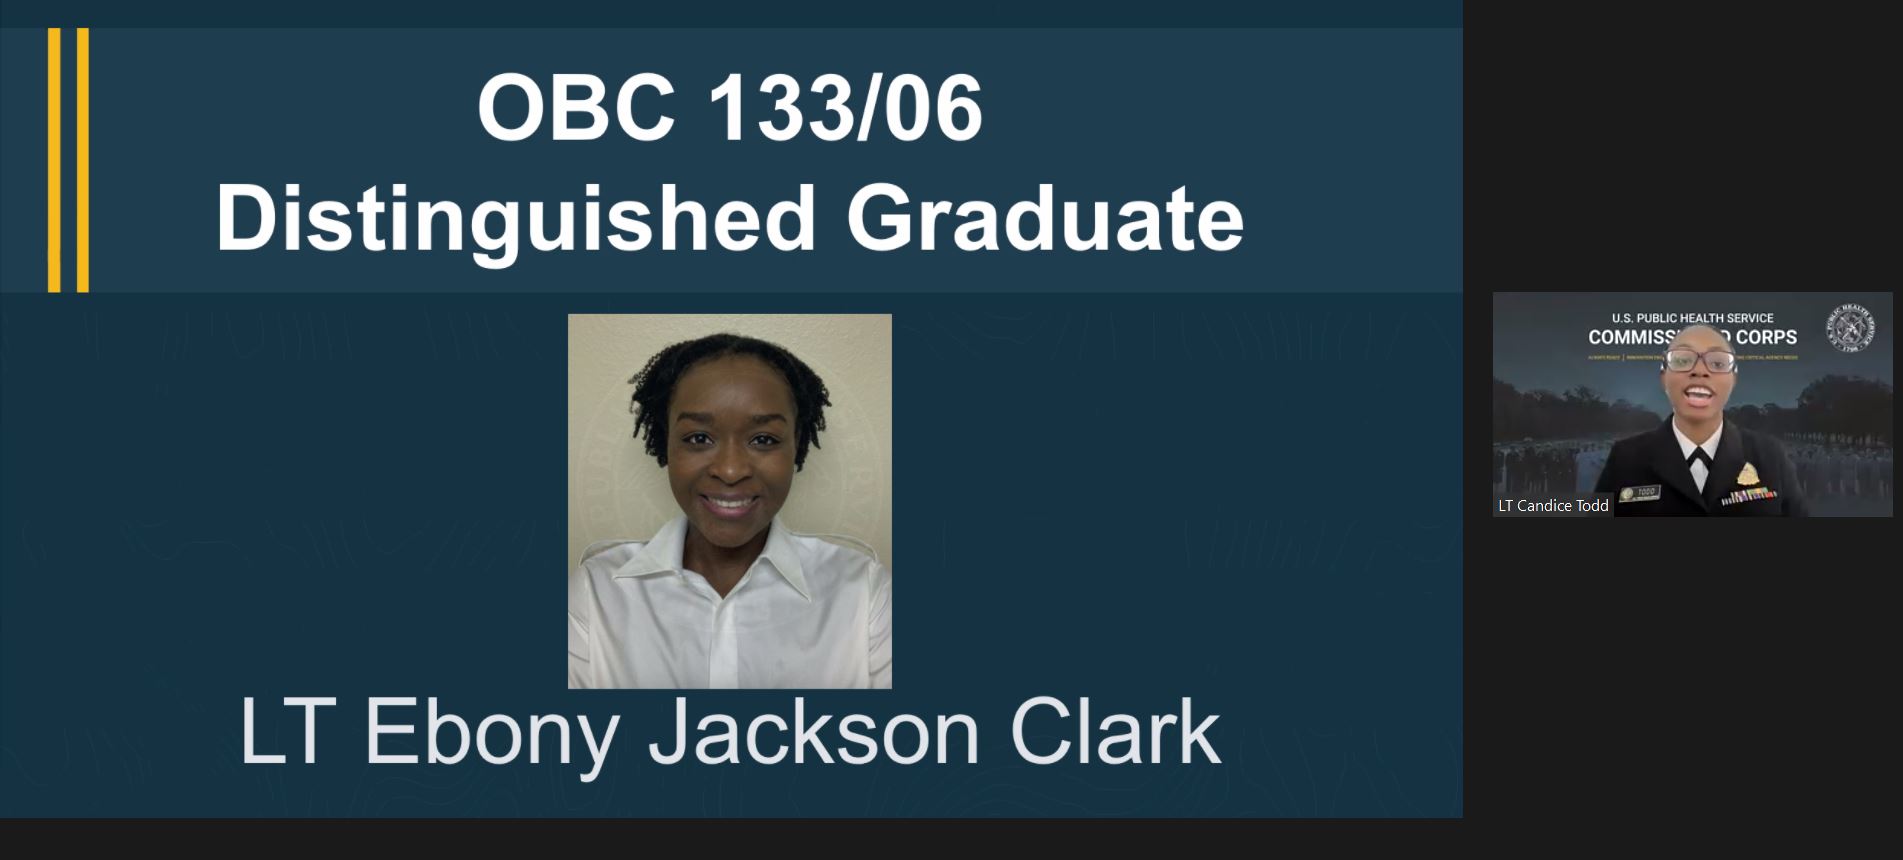 Ebony Jackson